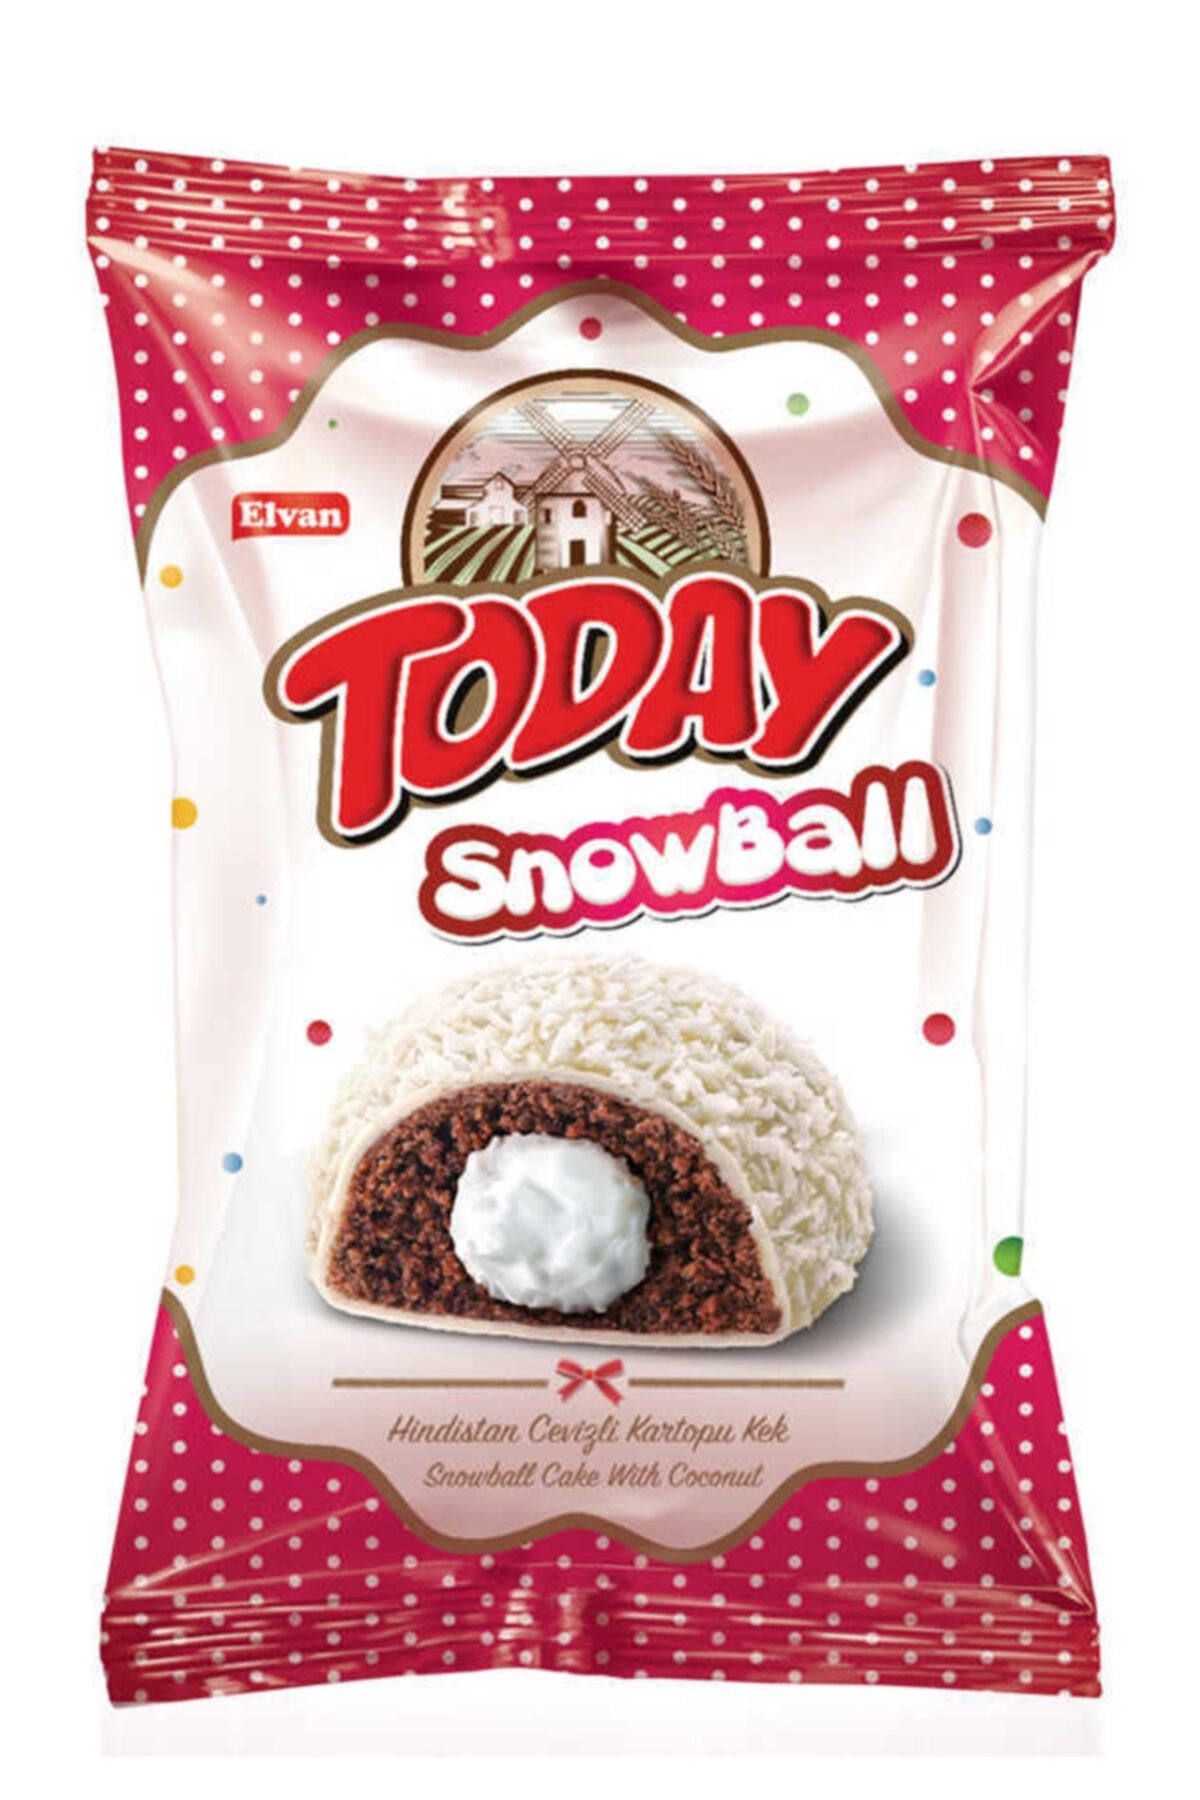 Elvan Today Snowball Hindistan Cevizli Kek 45 Gr. 24 Adet (1 Kutu)